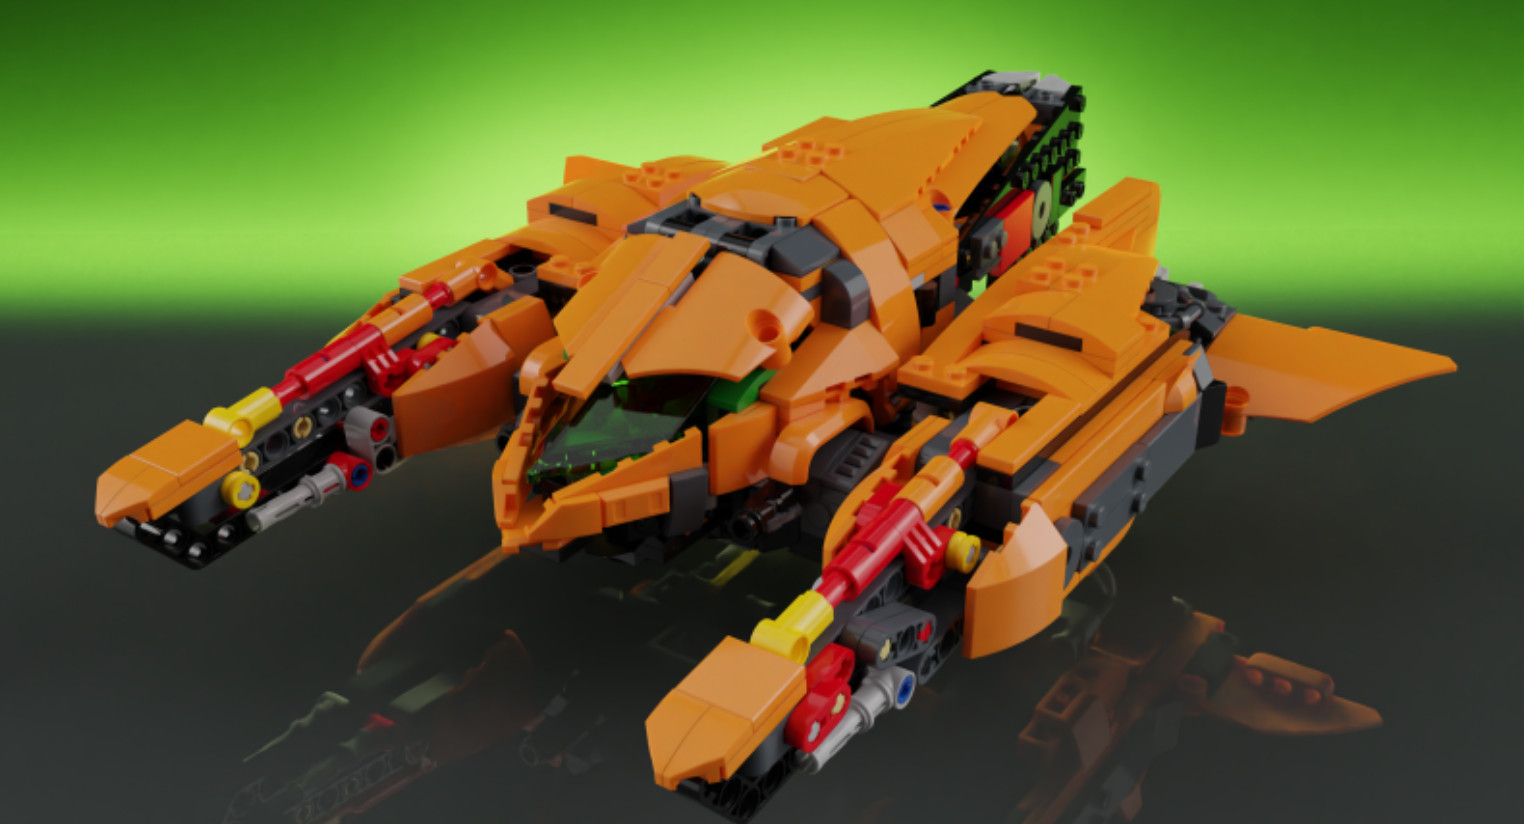 Gunship Lego from L-DI-EGO